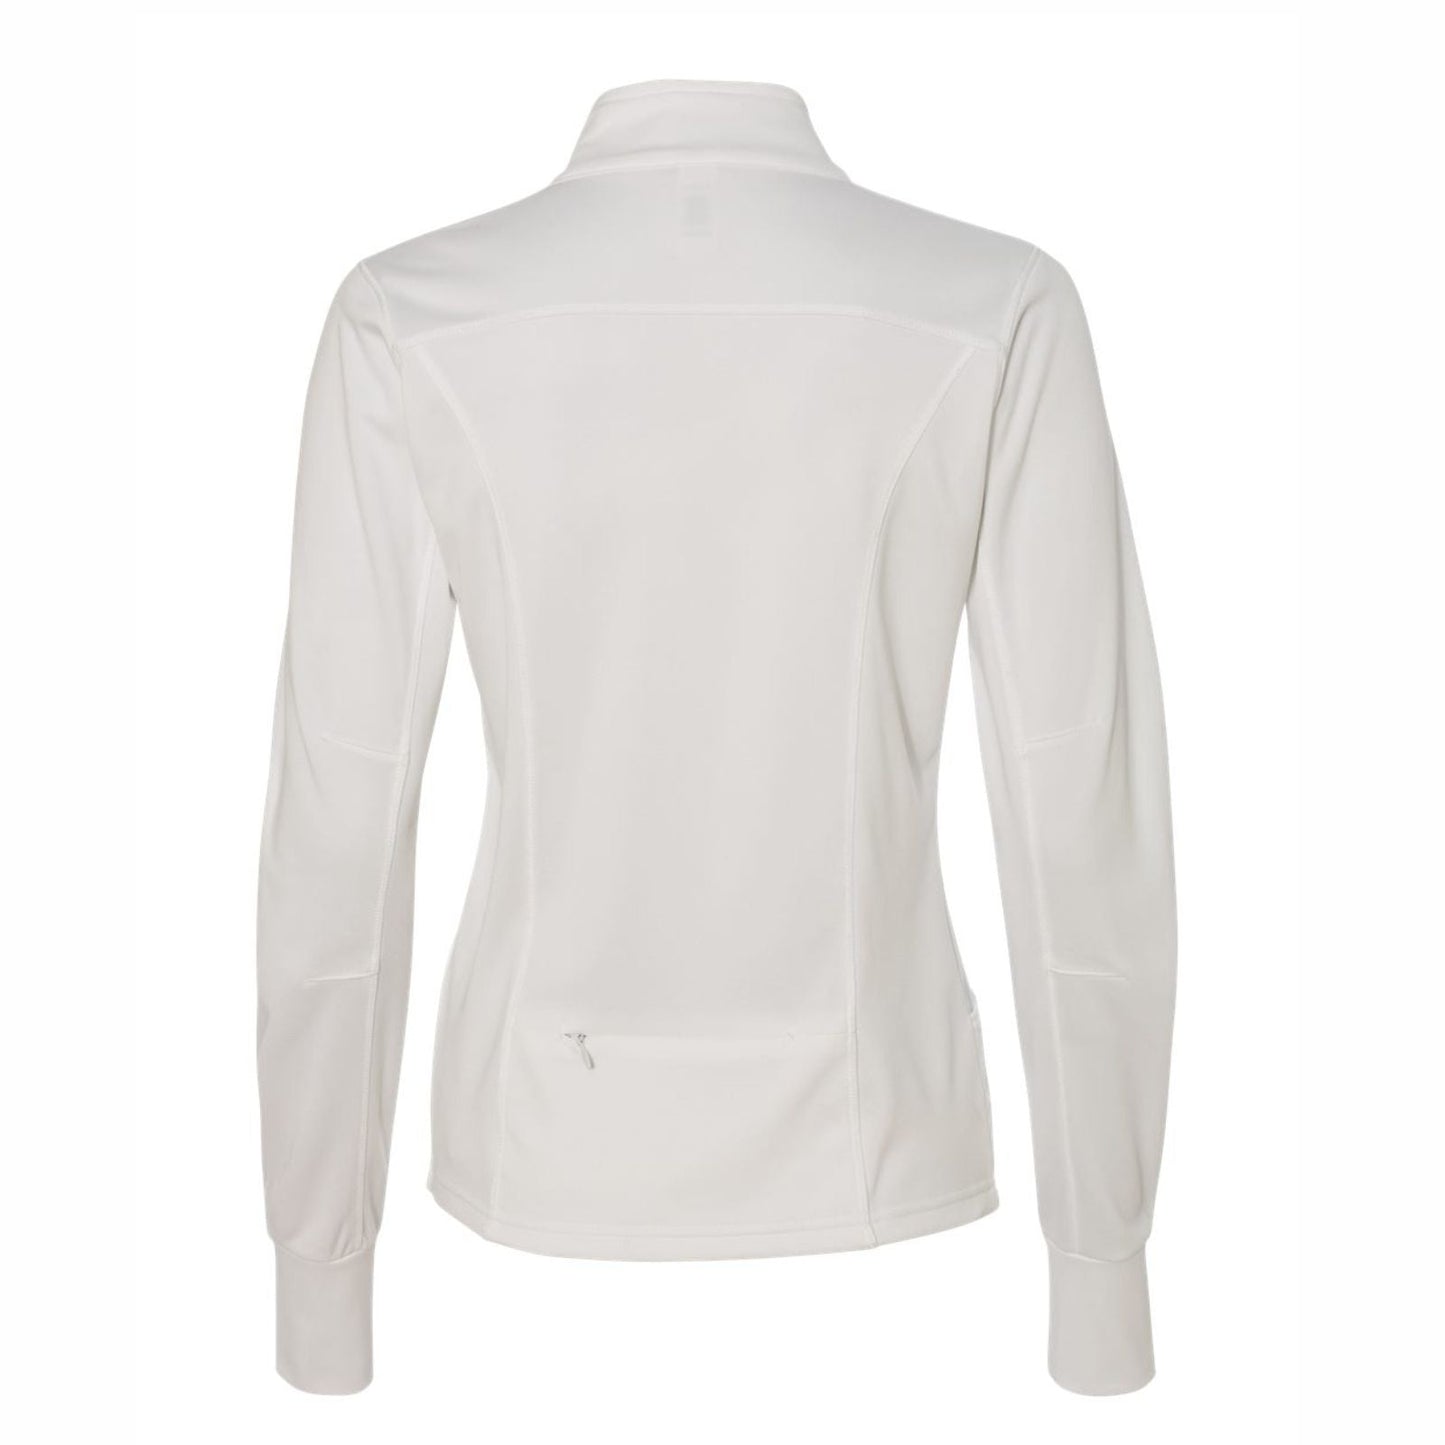 MBH Women's Tech Fleece Jacket -White- Embroidery